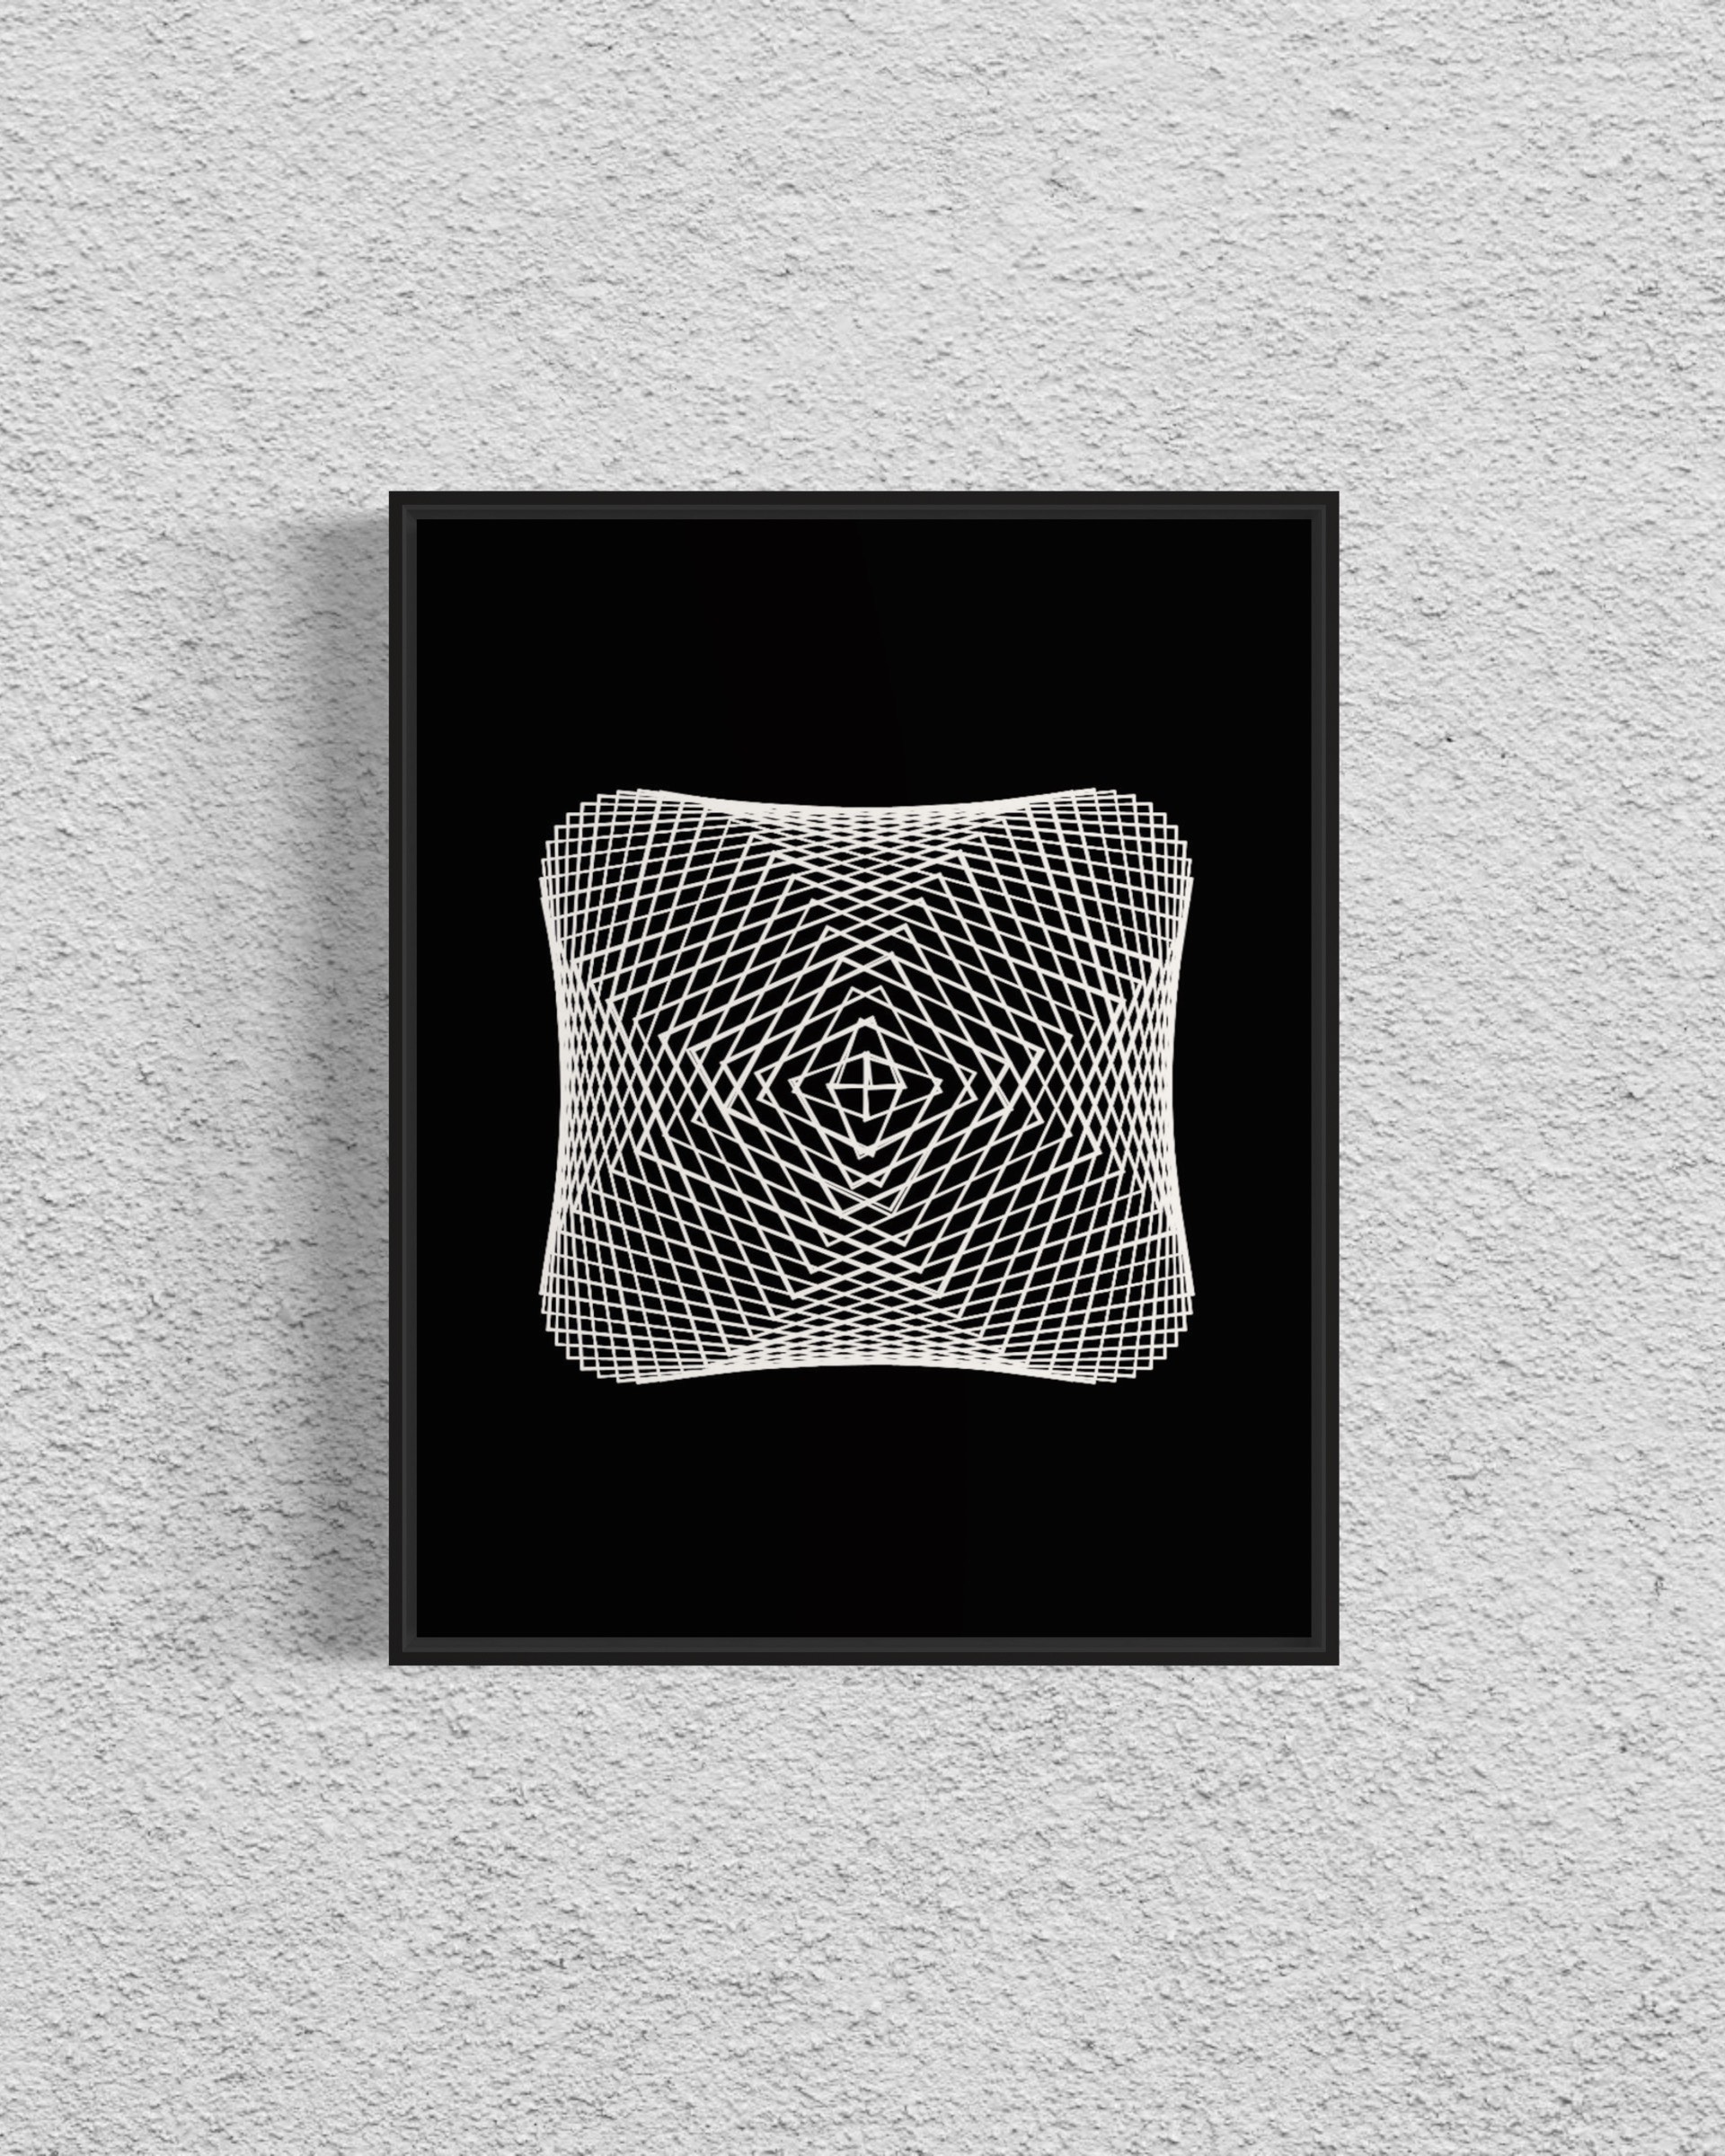 Clover 4 The Good Luck
Geometric art. Print on paper. Size 20x16